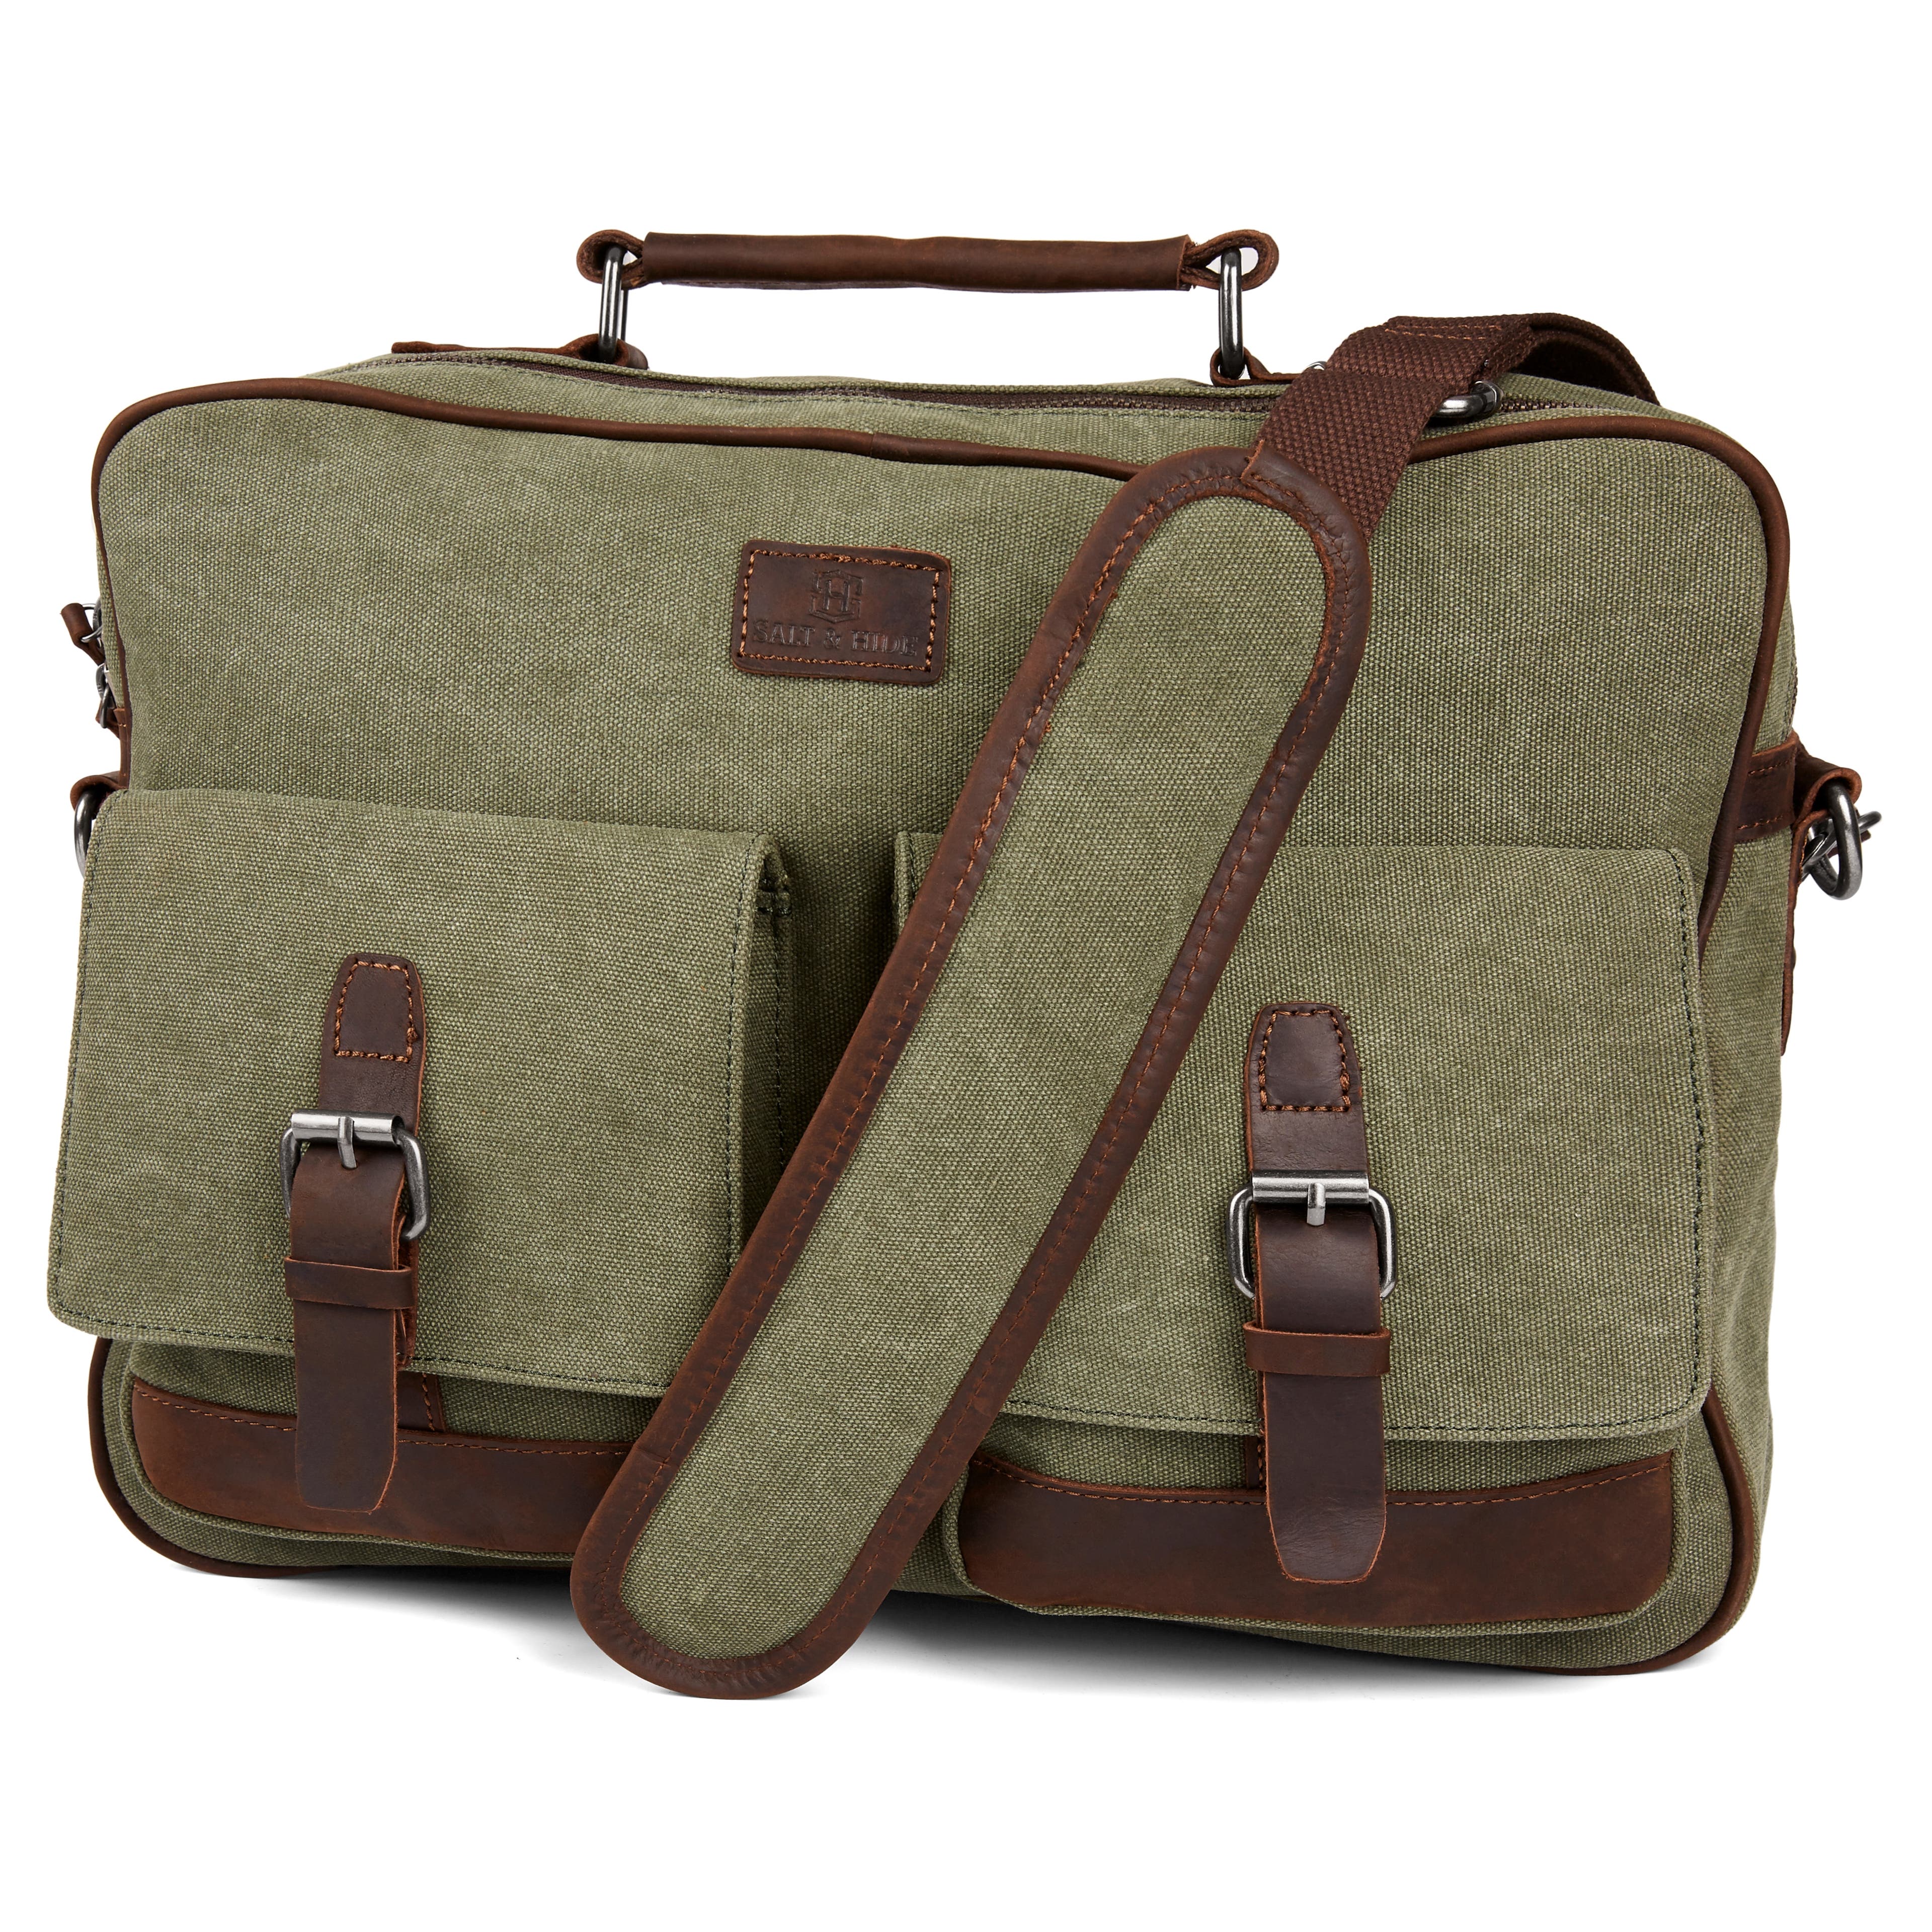 Tarpa | Olive Green & Dark Brown Canvas Messenger Bag